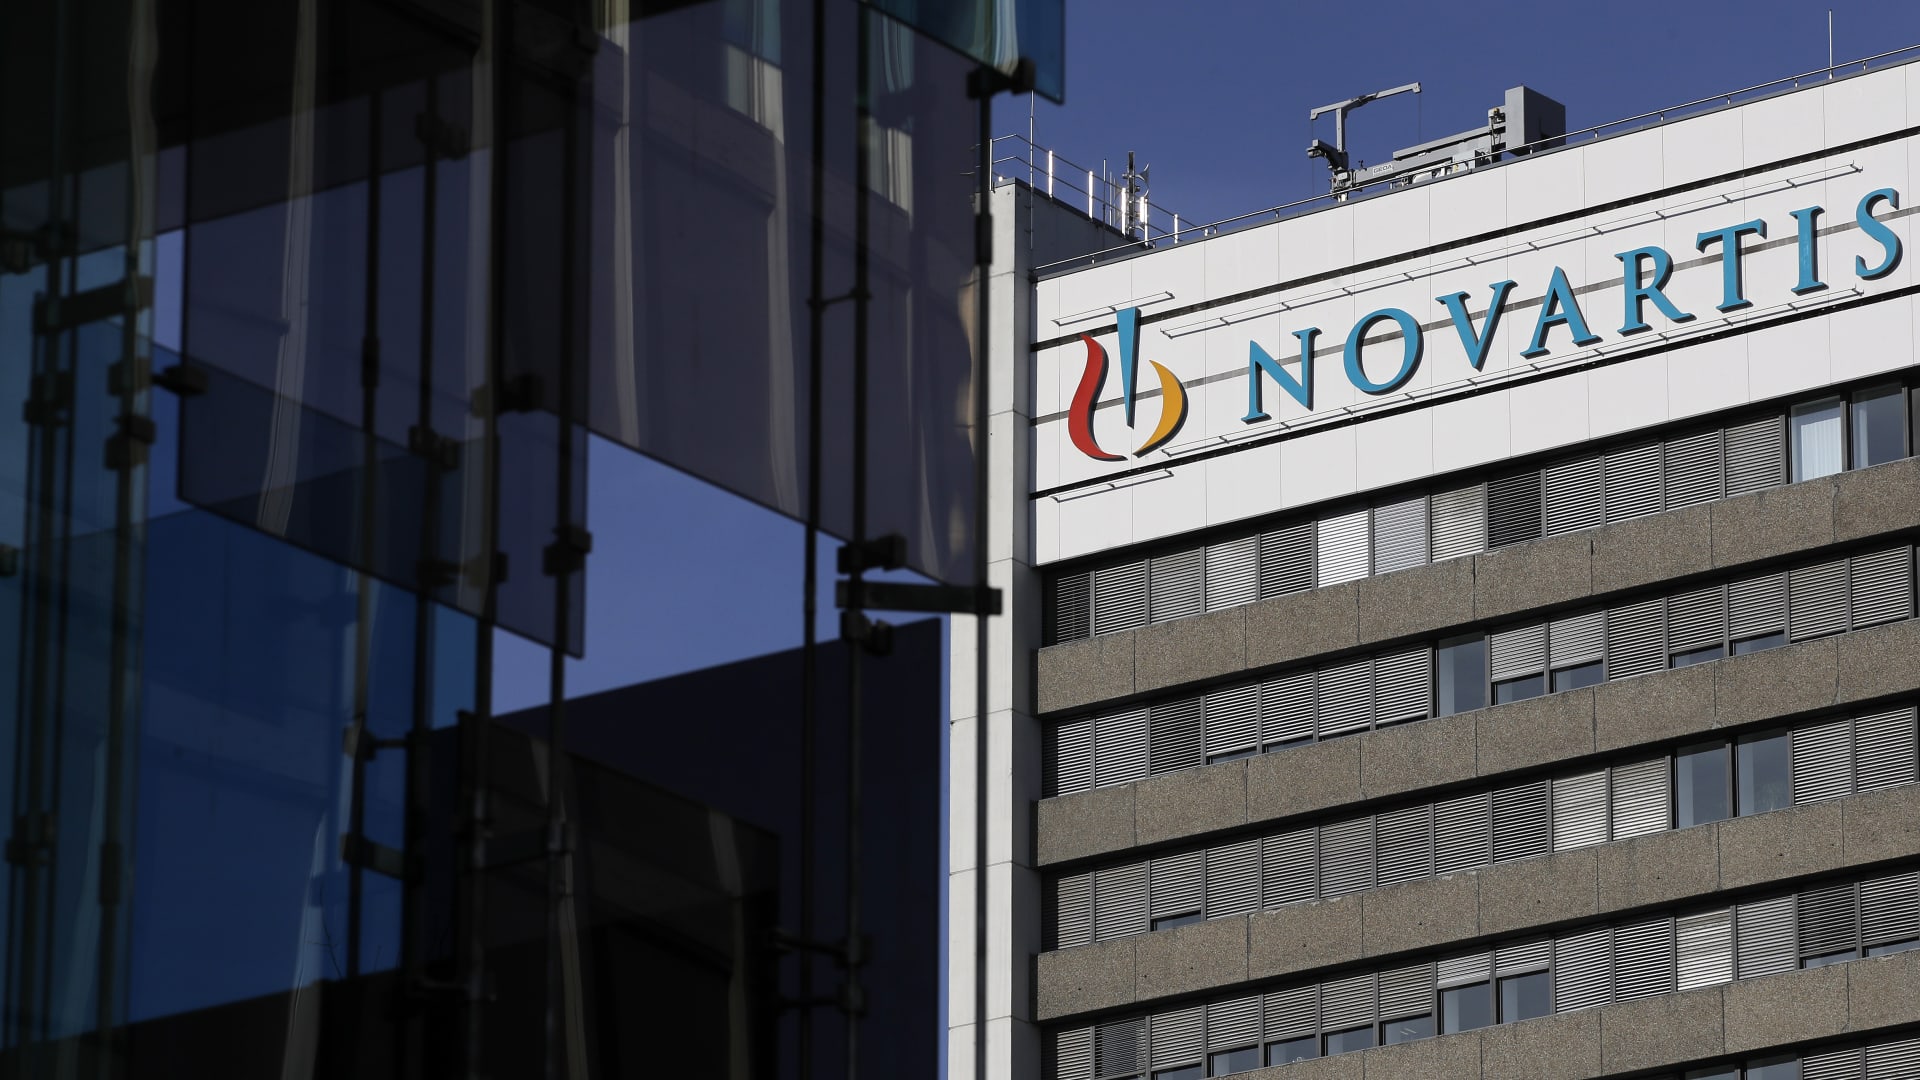 Novartis unit Sandoz starts trading at 24 Swiss francs after completing spinoff